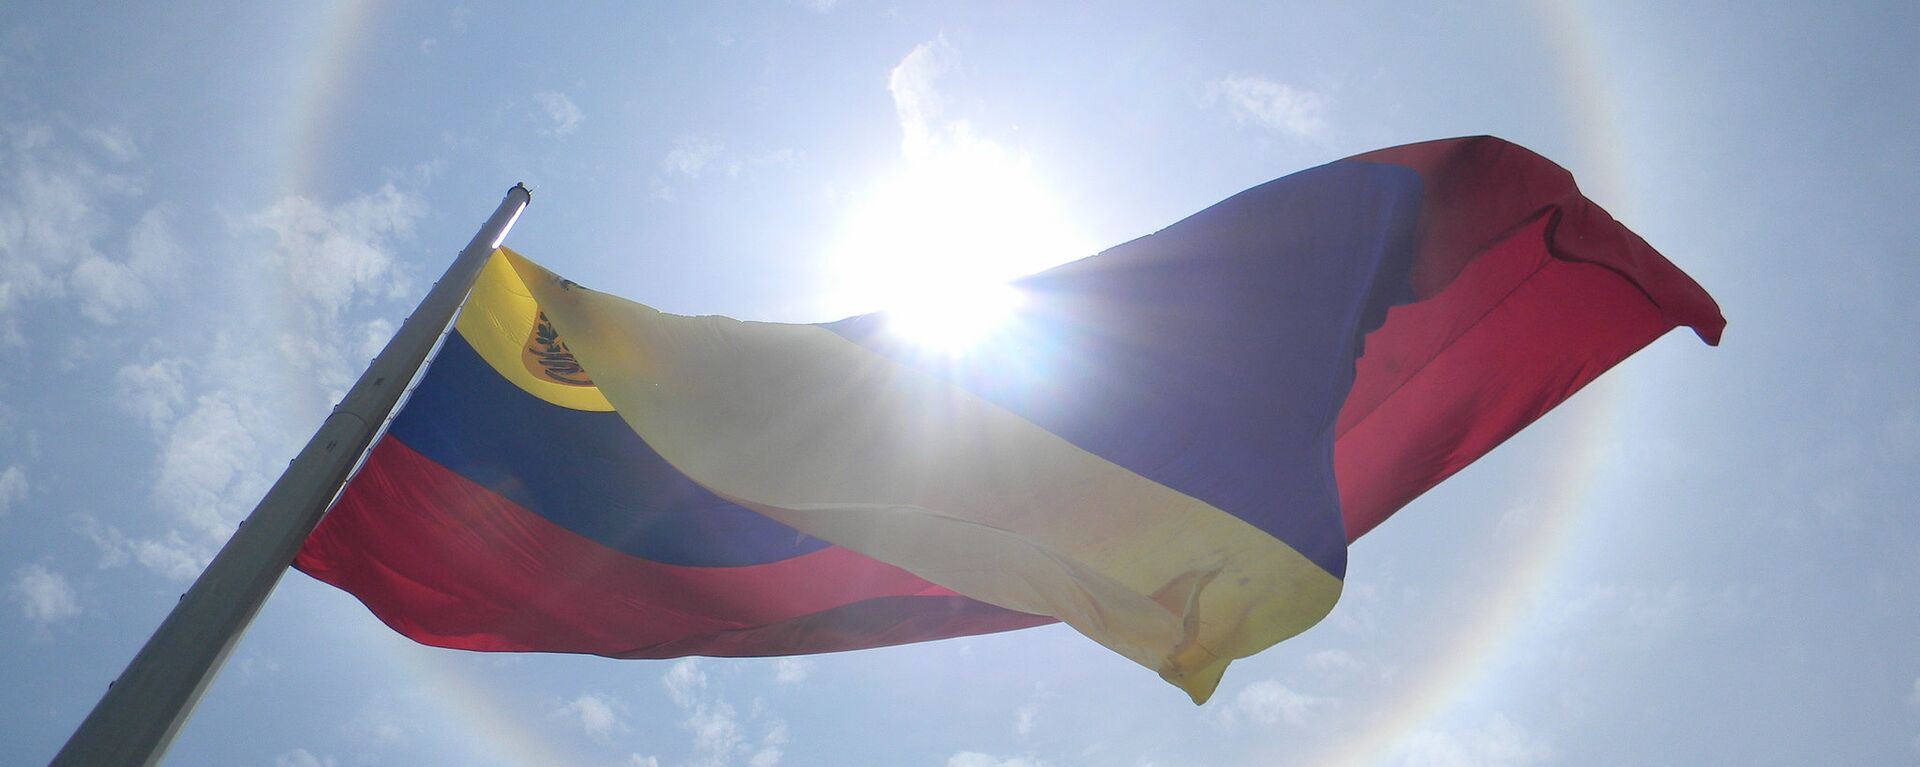 Bandera de Venezuela - Sputnik Mundo, 1920, 26.06.2020